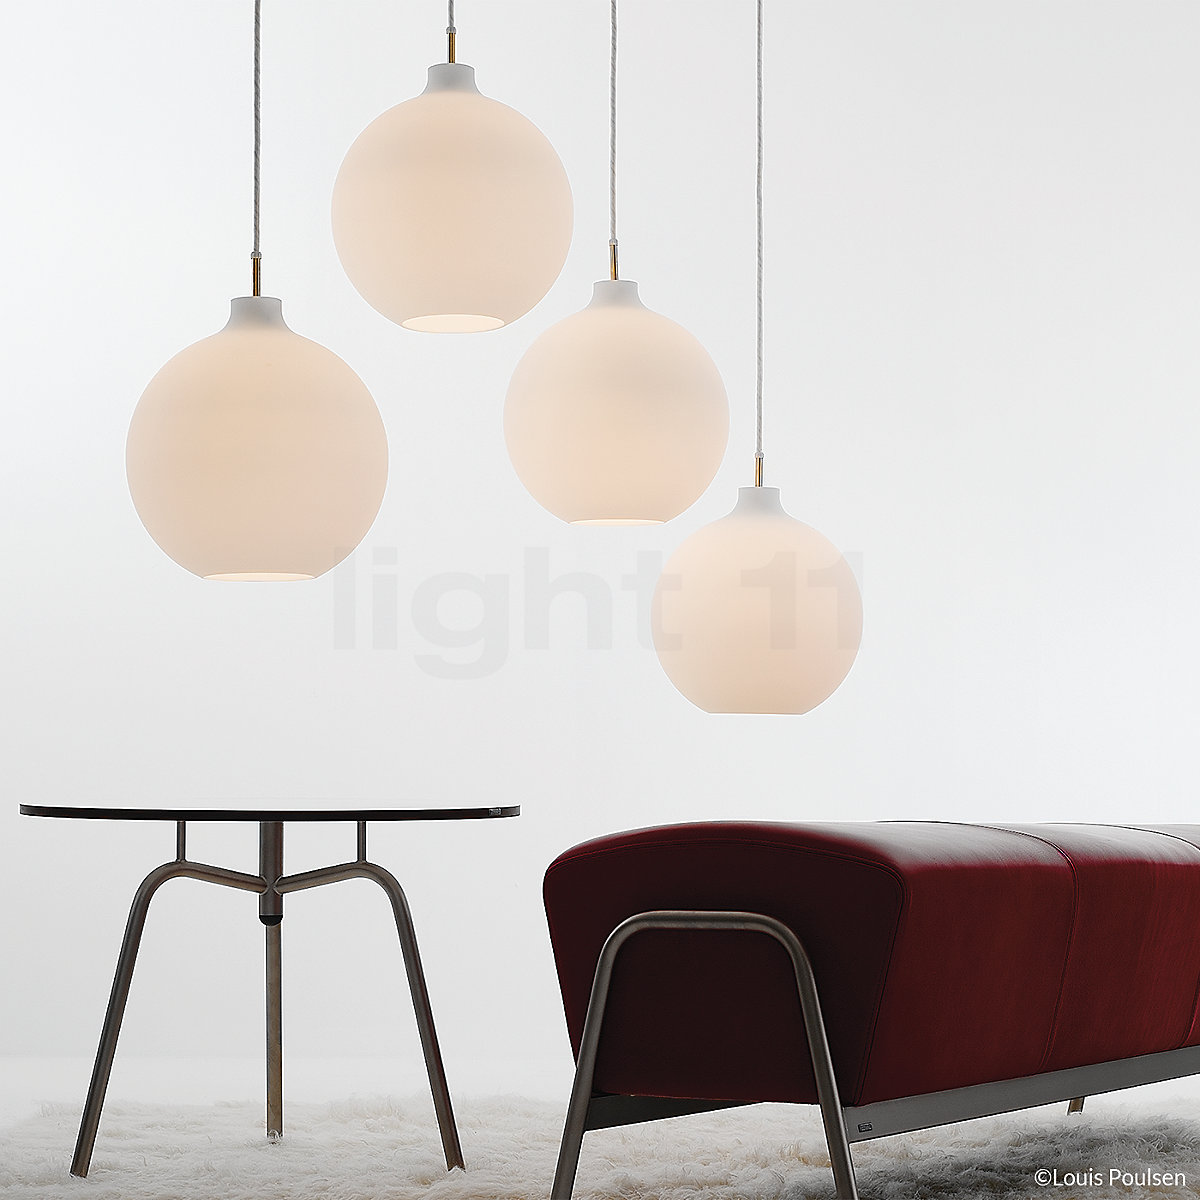 Buy Louis Poulsen Wohlert Pendant Light at light11.eu